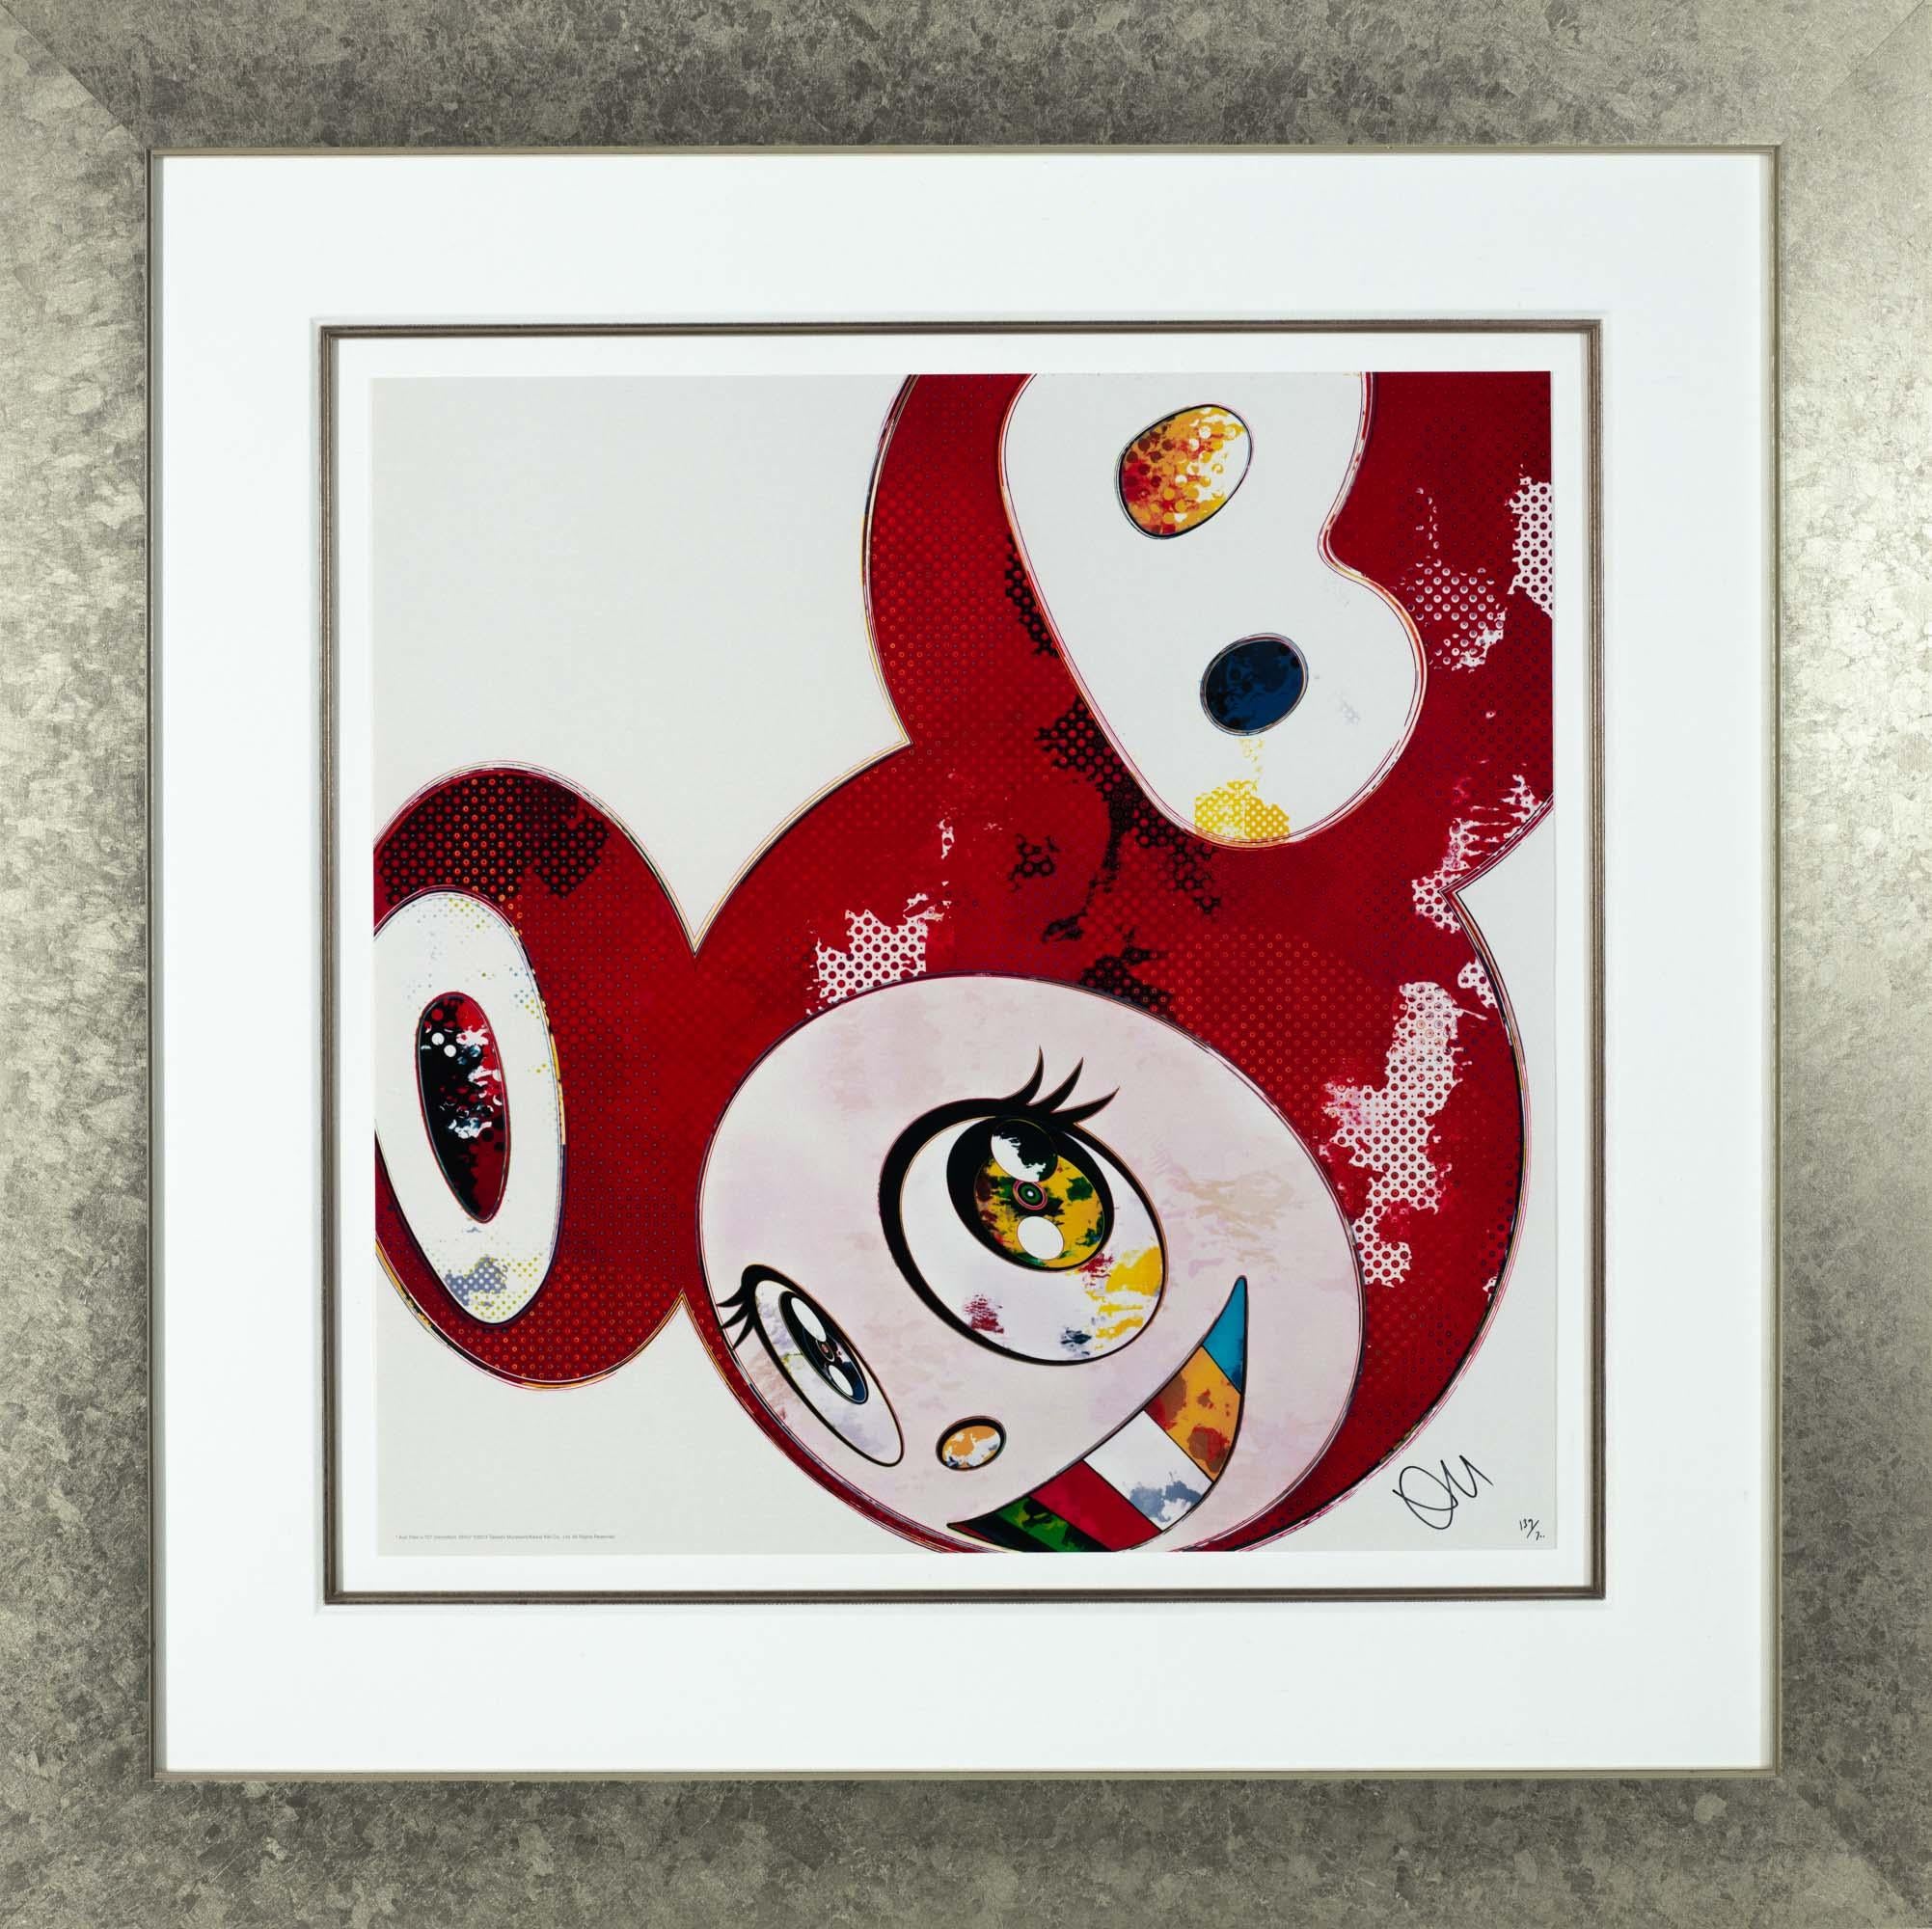 And Then x 727 (Vermillion:SHU)  - Pop Art Print by Takashi Murakami